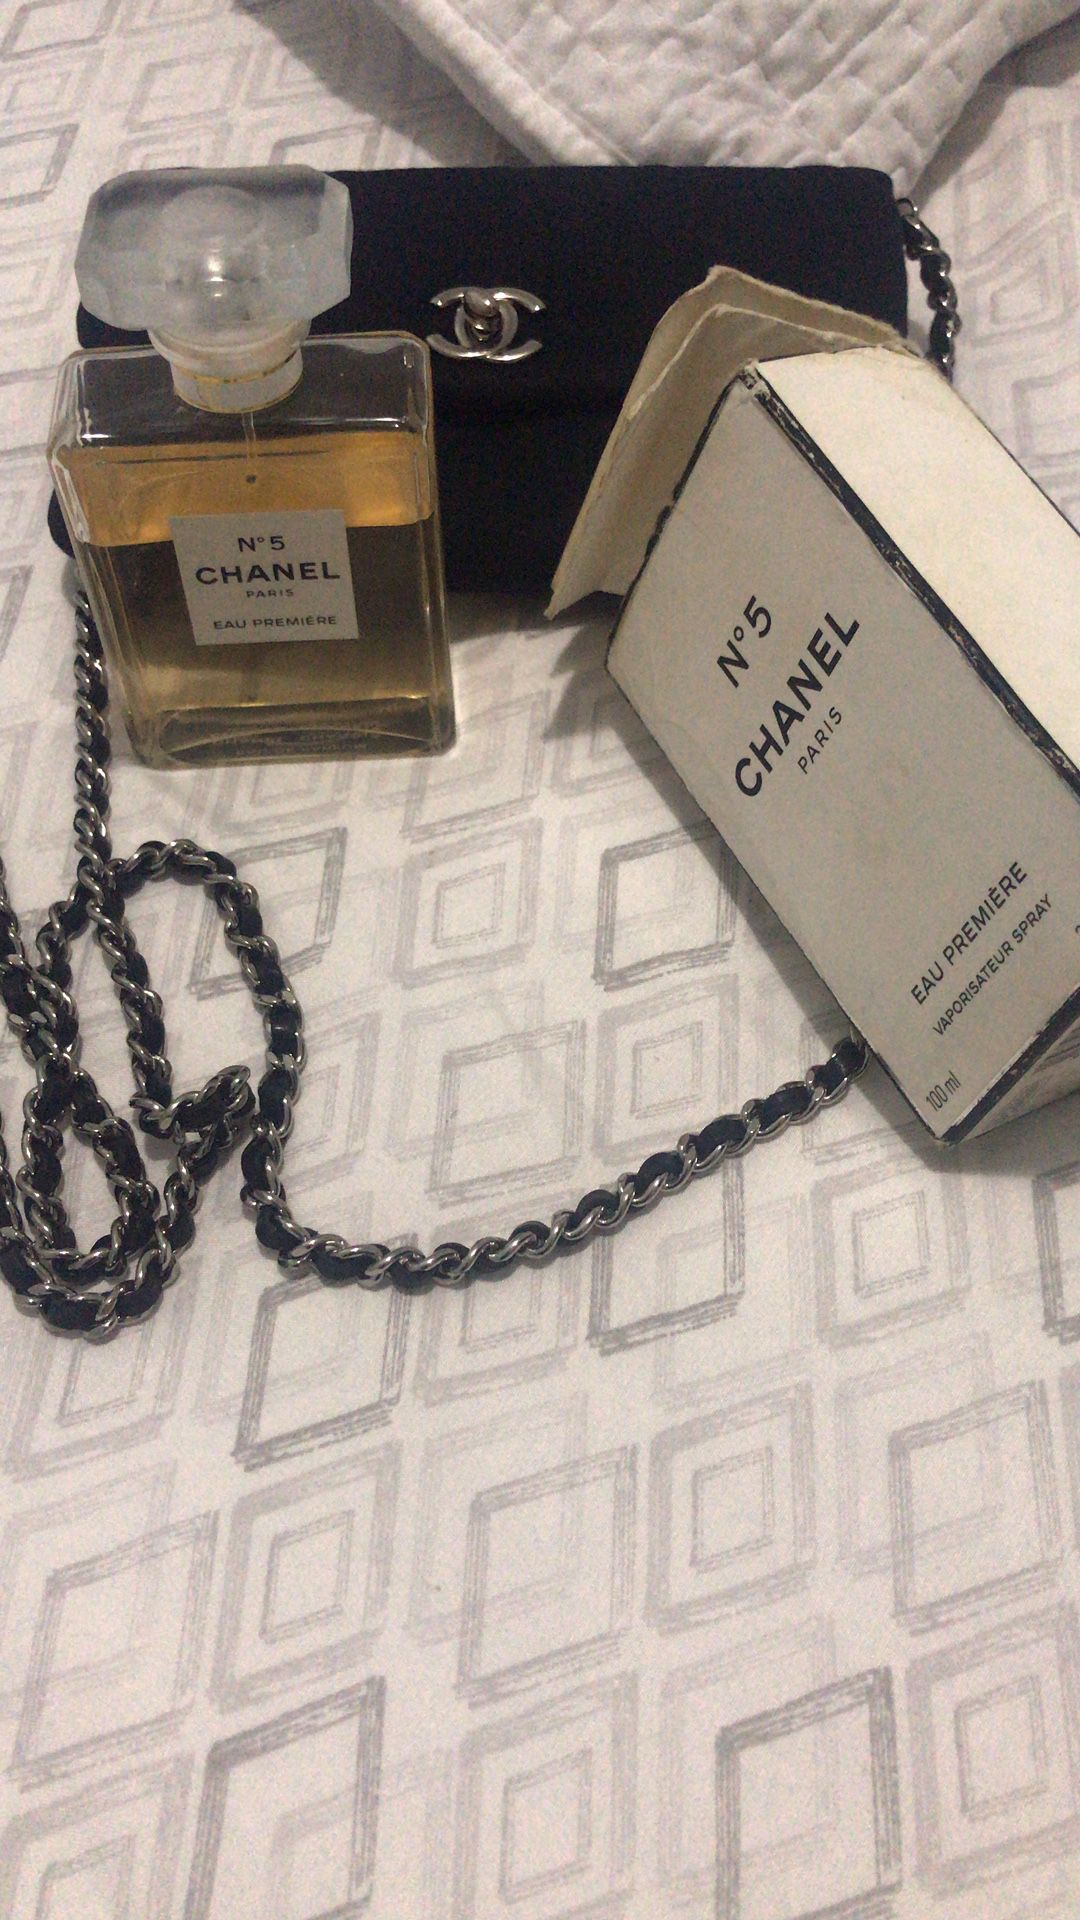 Chanel No.5 perfume